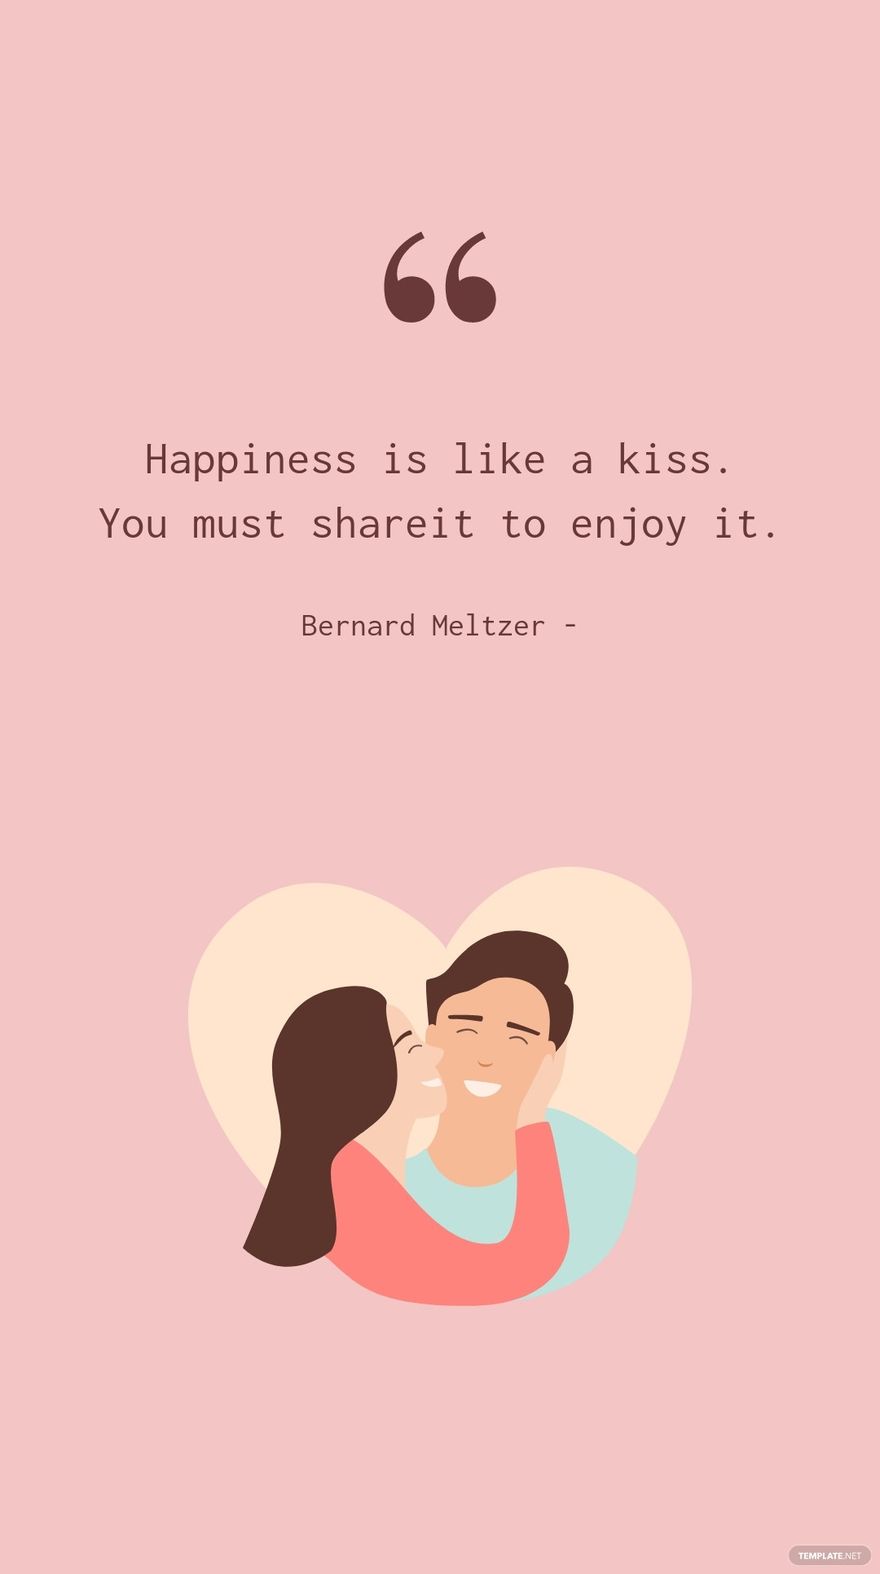 Bernard Meltzer - Happiness is like a kiss. You must share it to enjoy it.